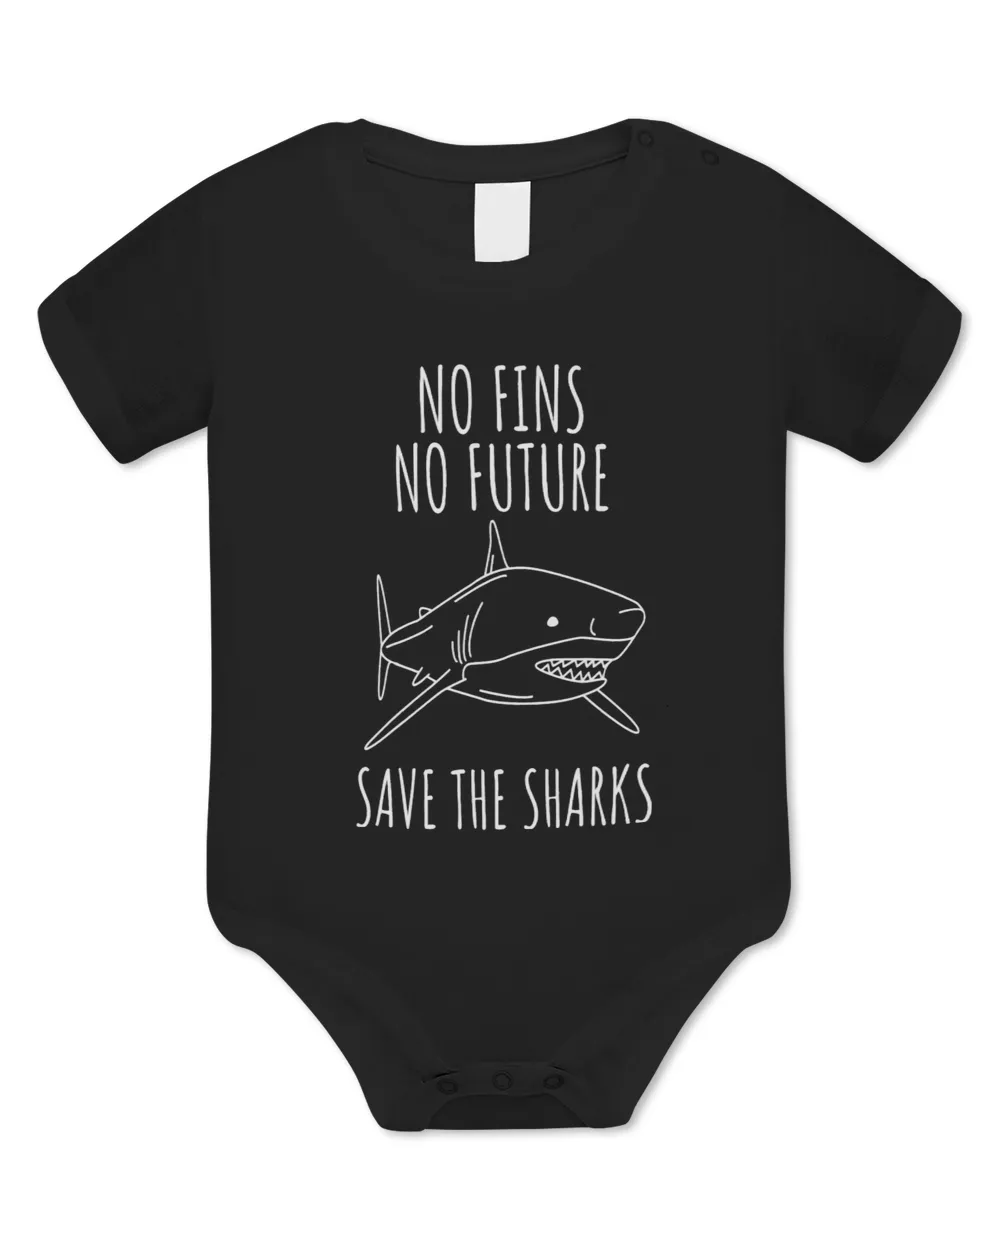 Shark Protection No Fins no Future Save the Sharks 2